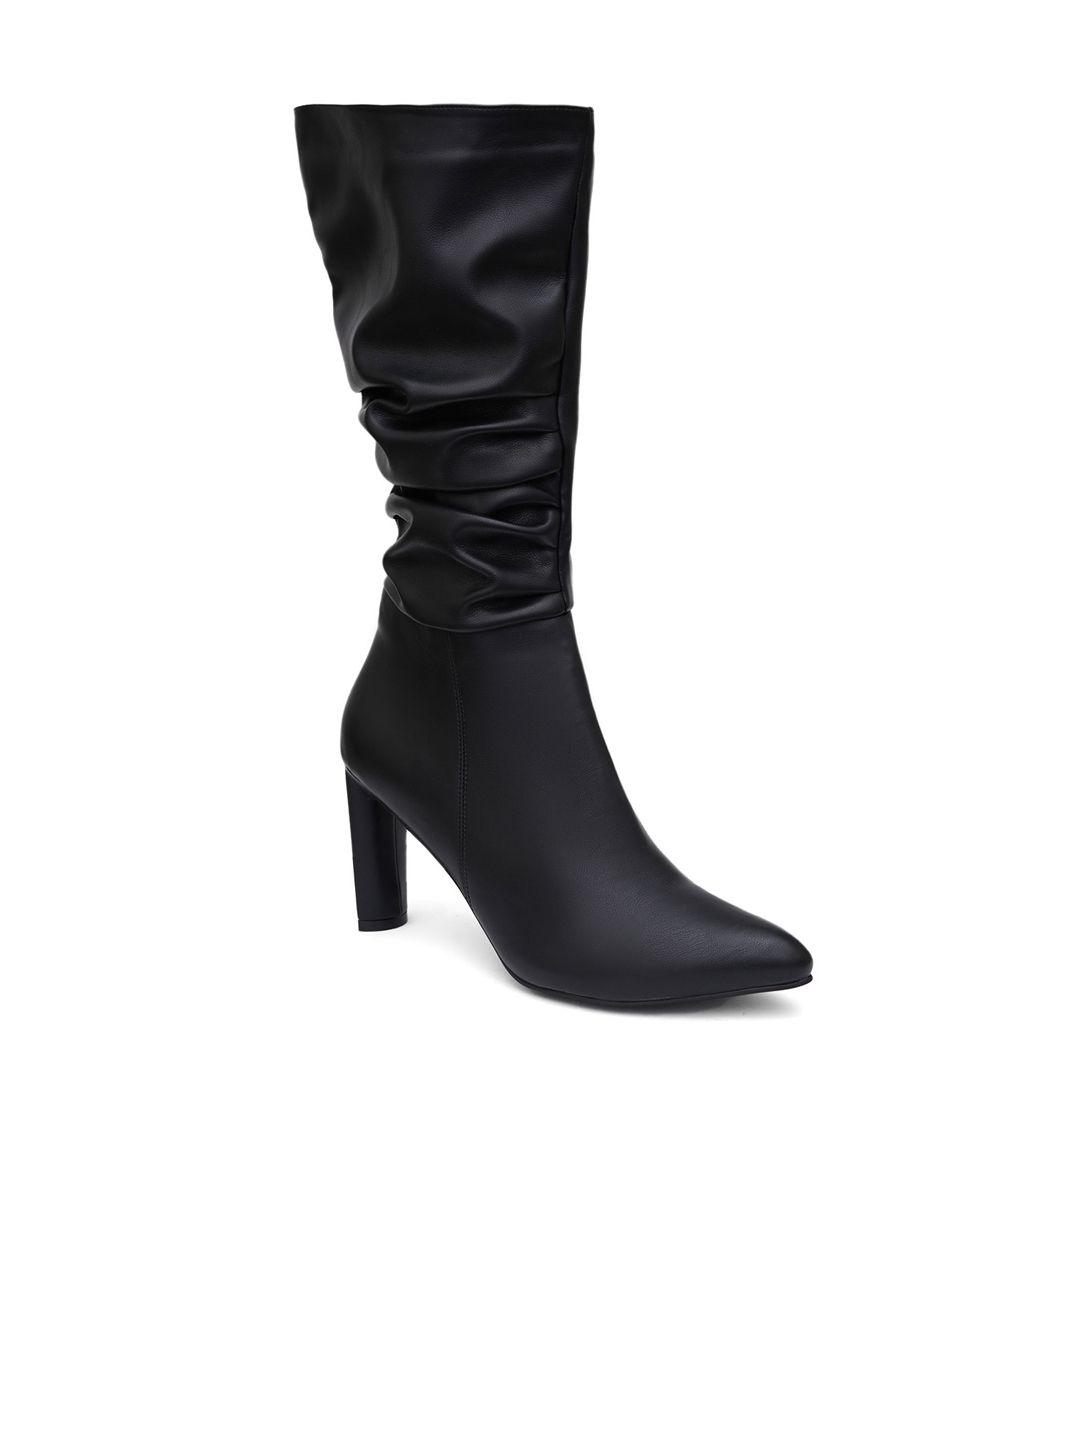 sherrif shoes women block-heeled high-top slouchy boots